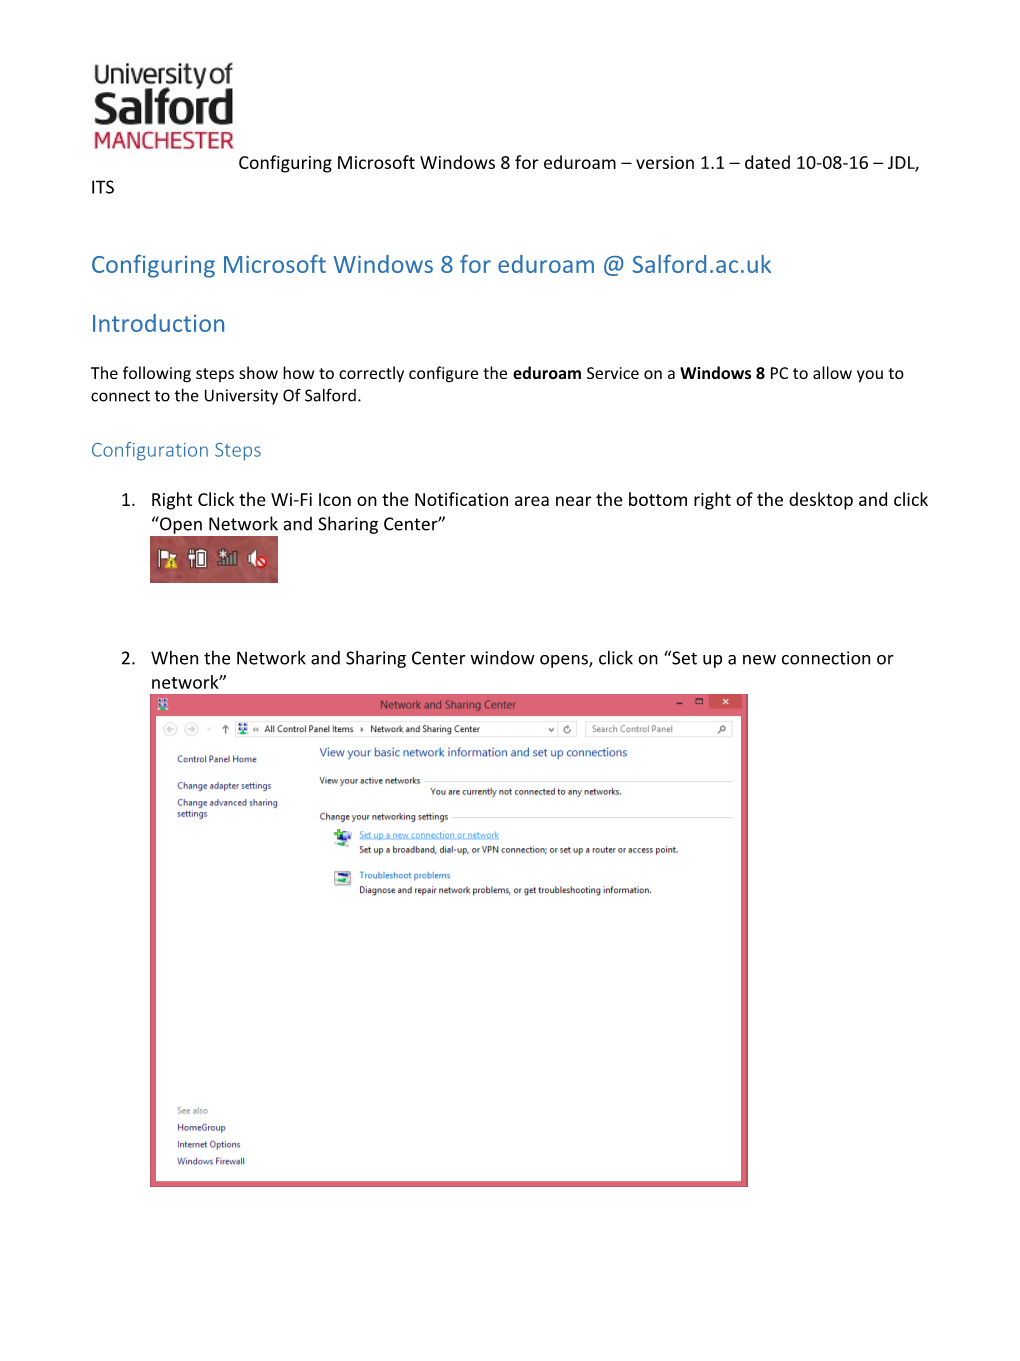 Configuring Microsoft Windows 8 for Eduroam Version 1.1 Dated 10-08-16 JDL, ITS